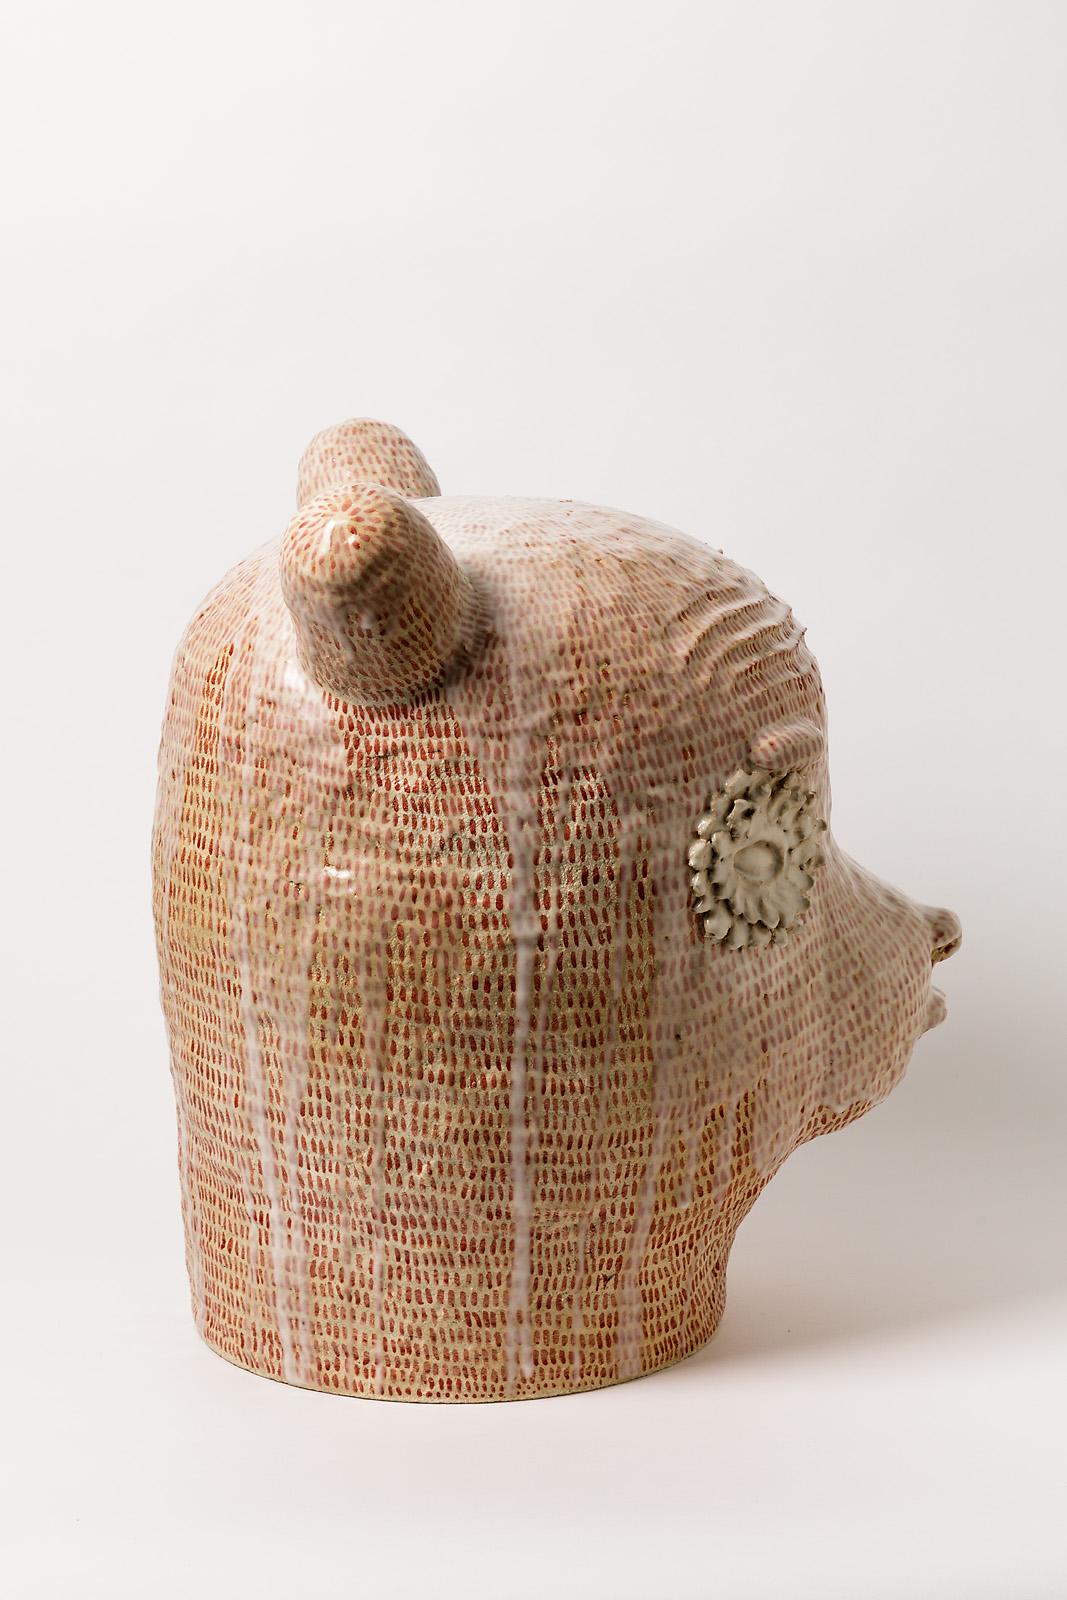 Ceramic Sculpture by Laurent Dufour, 2020 1